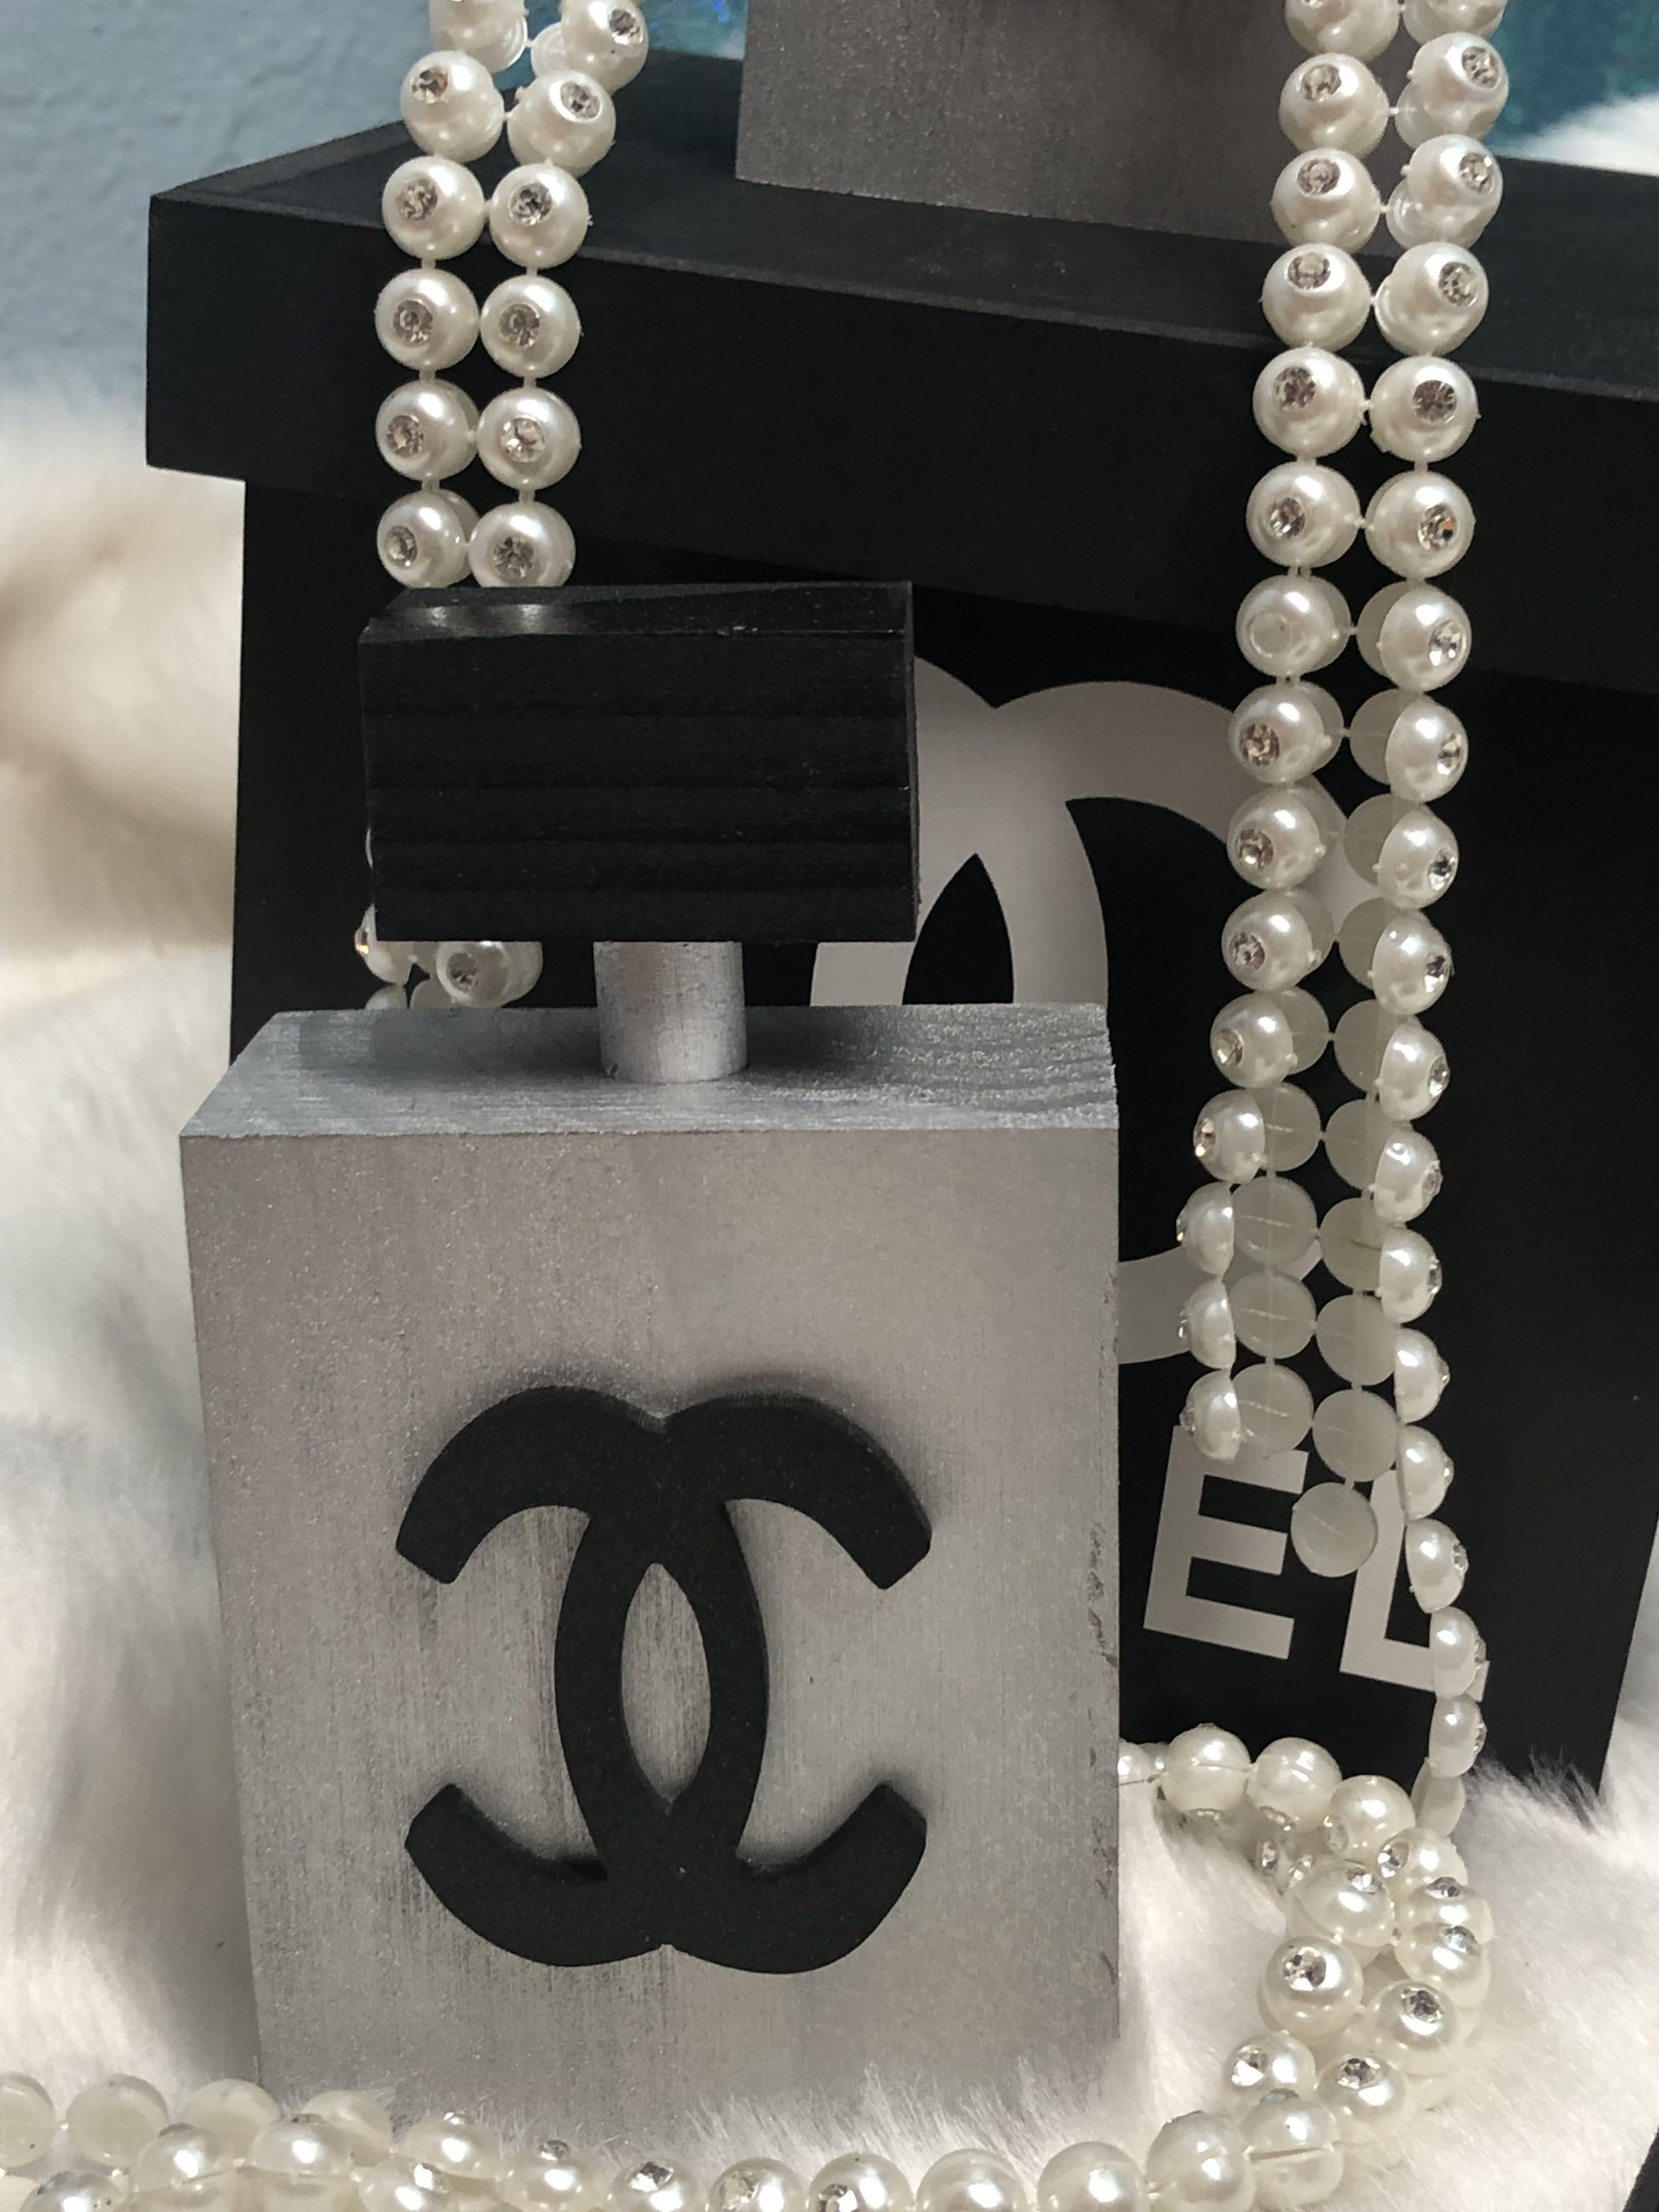 4” high cardboard Chanel 5 collector decor $4 - Depop